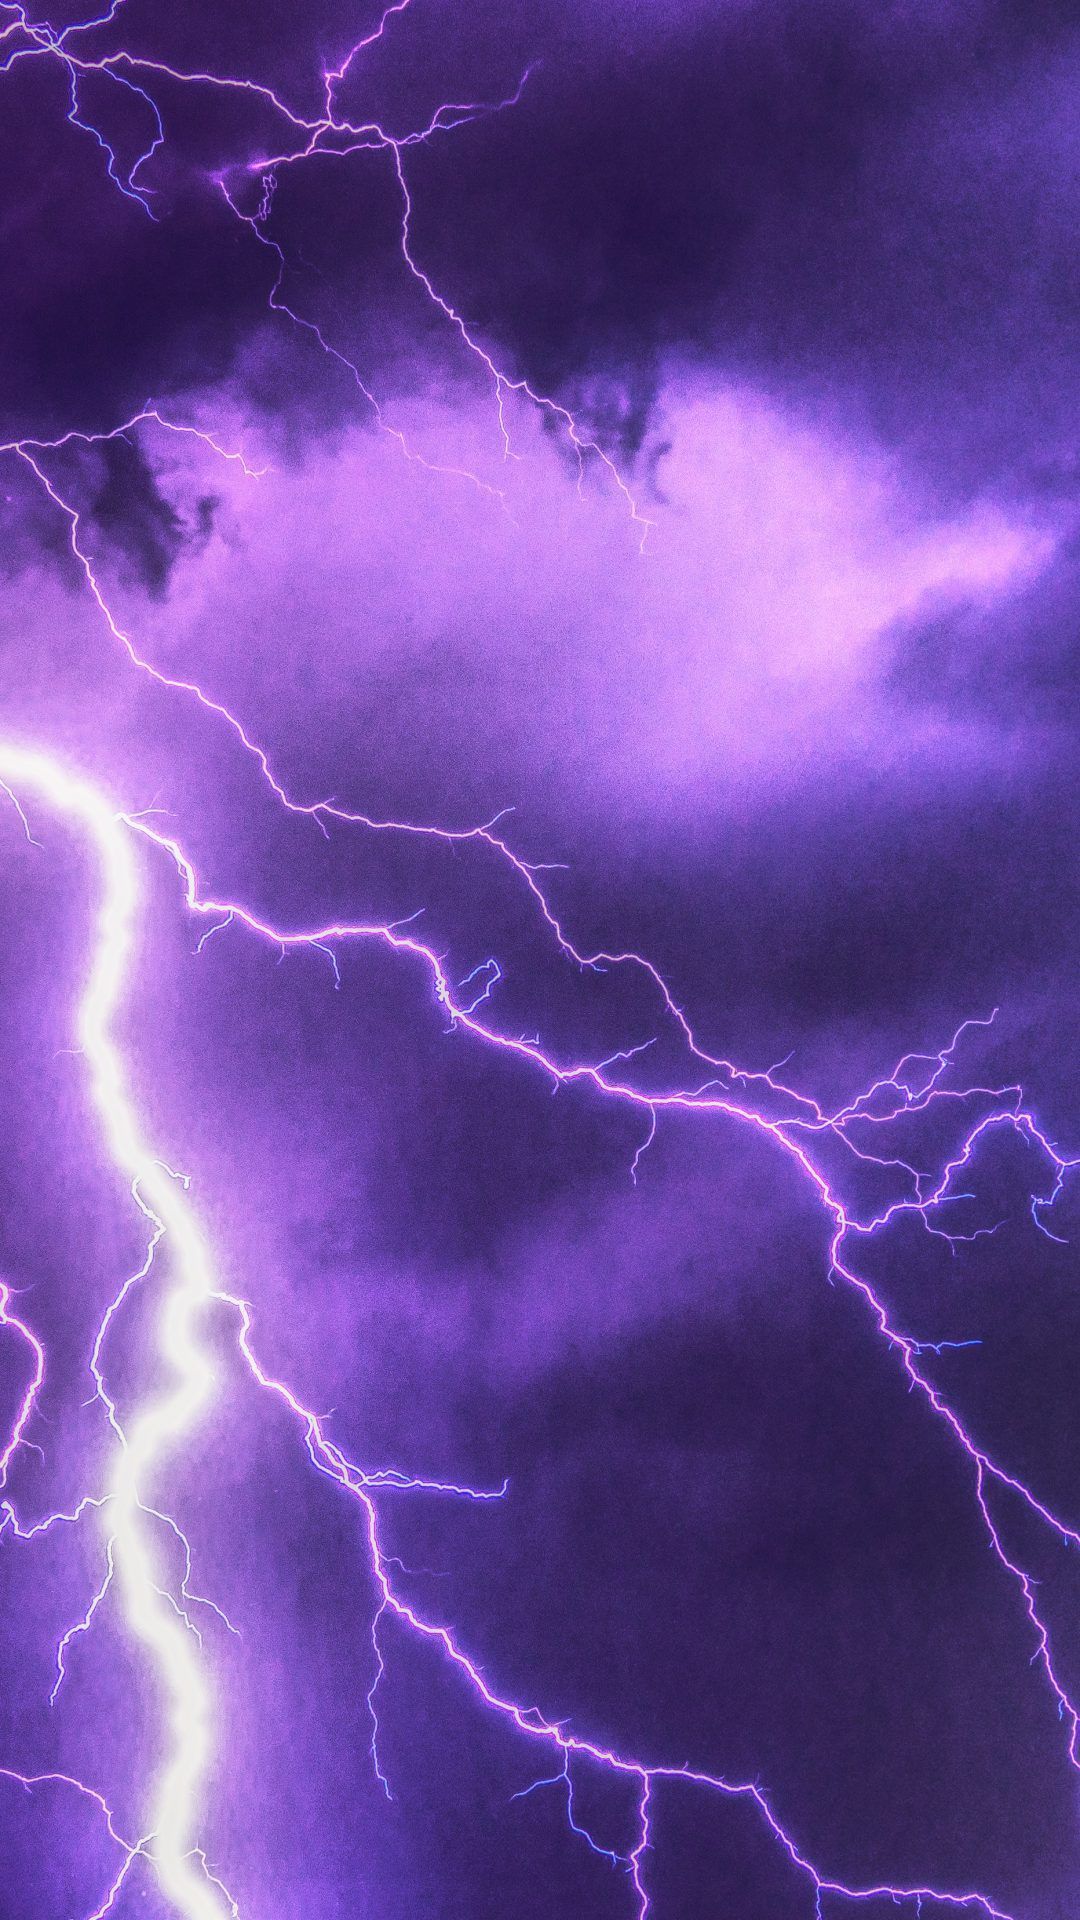 Lightning in the purple sky wallpaper 1080x1920 - Lightning